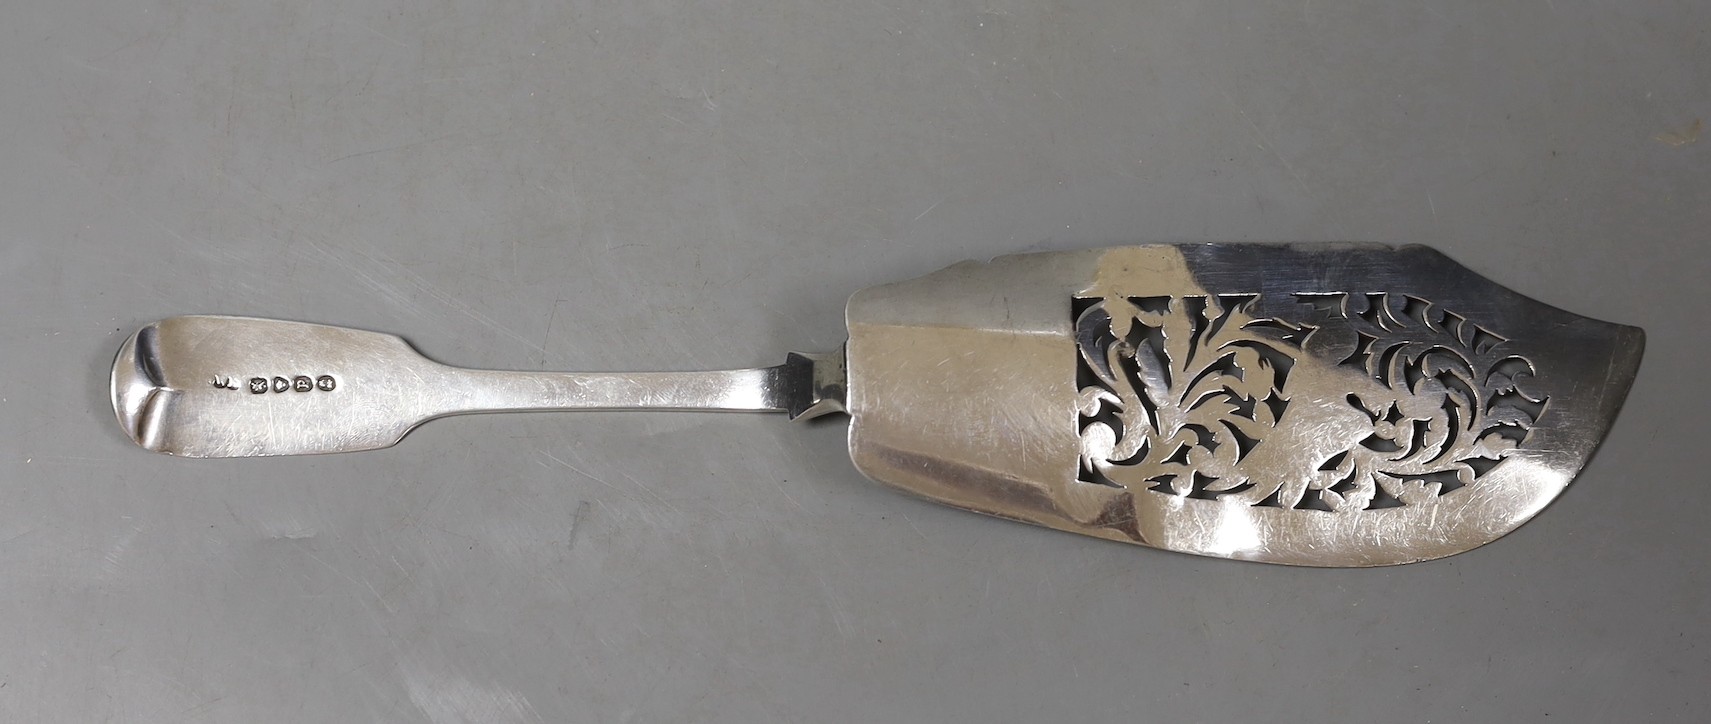 A William IV silver fiddle pattern fish slice, William Eaton, London, 1830, 28.5cm, 114 grams.